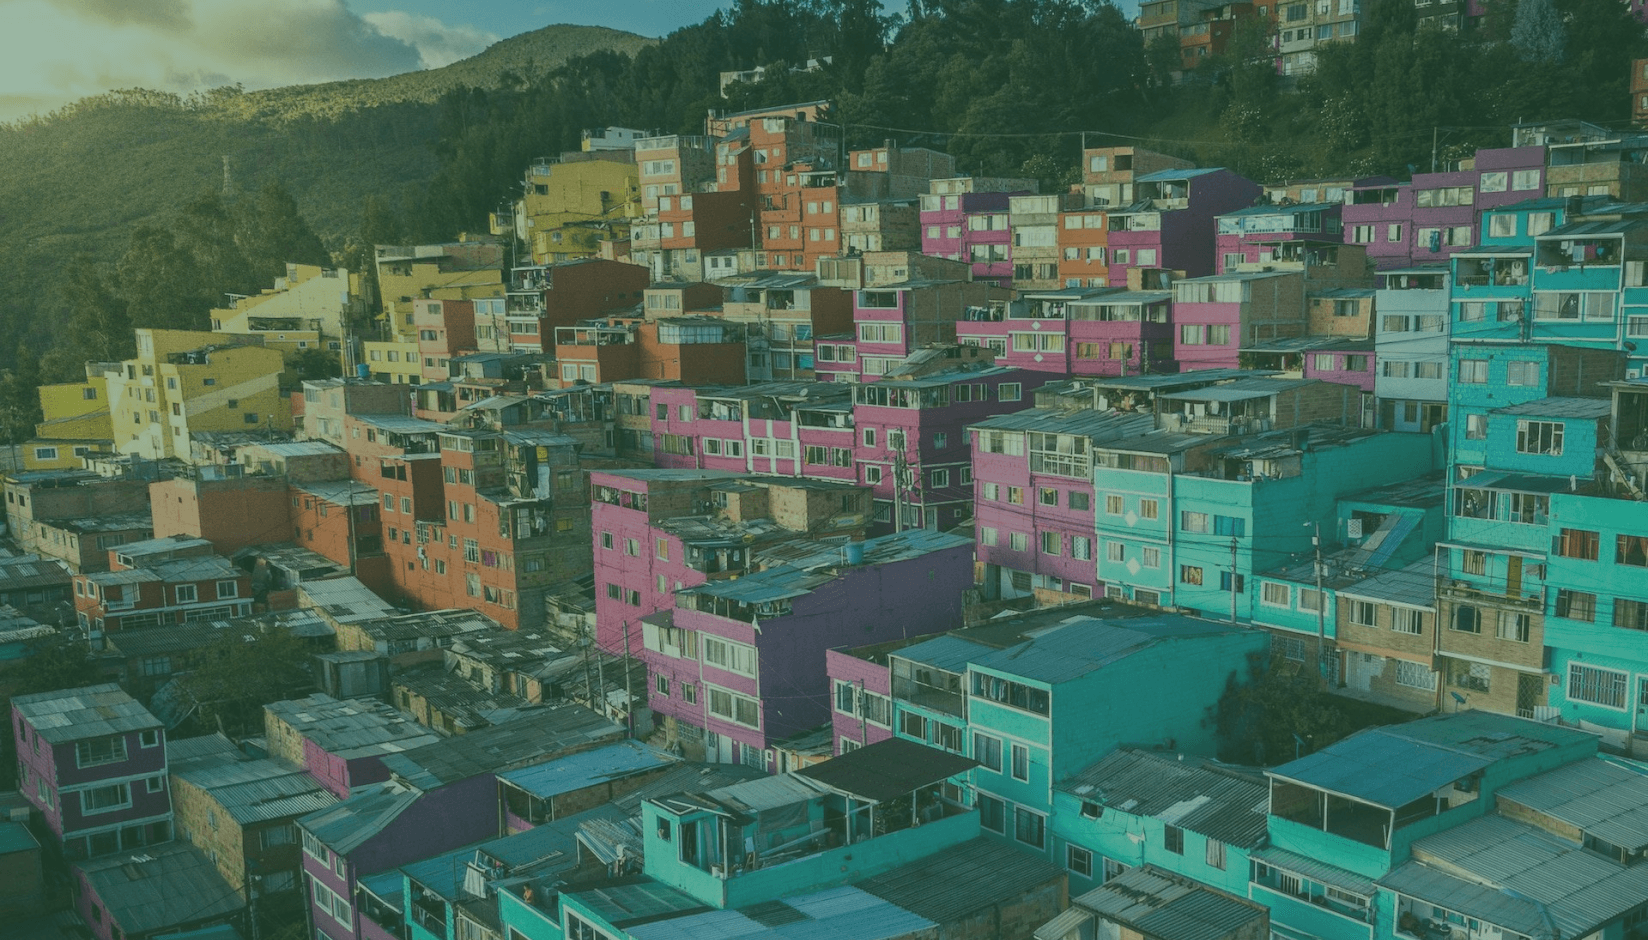 Medellin, Colombia - top coworking space destination